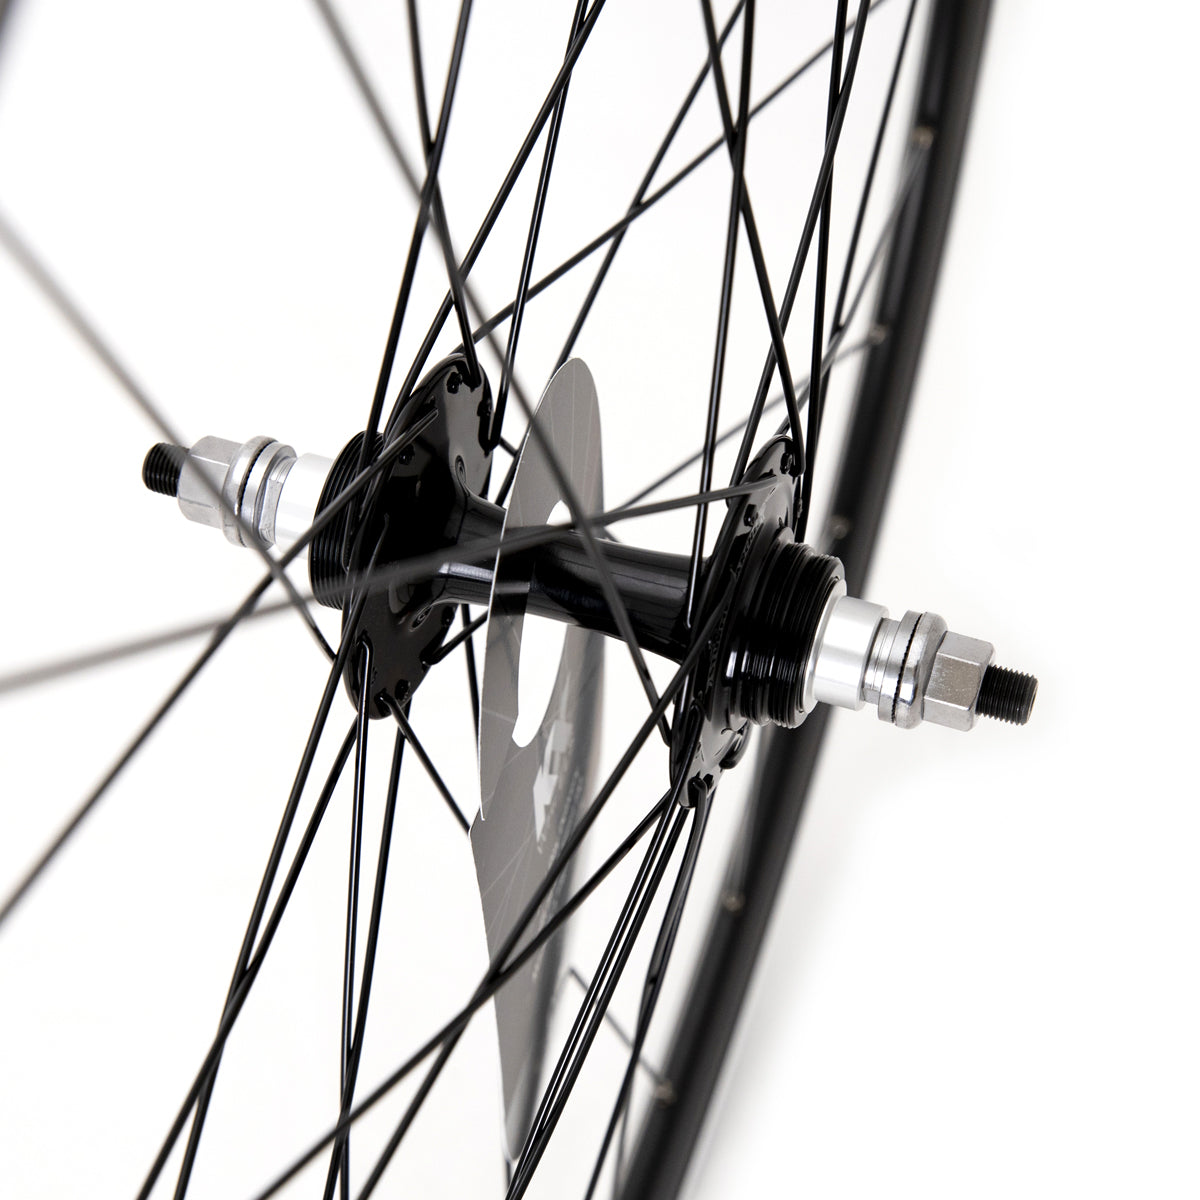 KX Wheels Pro FXD 700c Front Bike Wheel Alternate 1